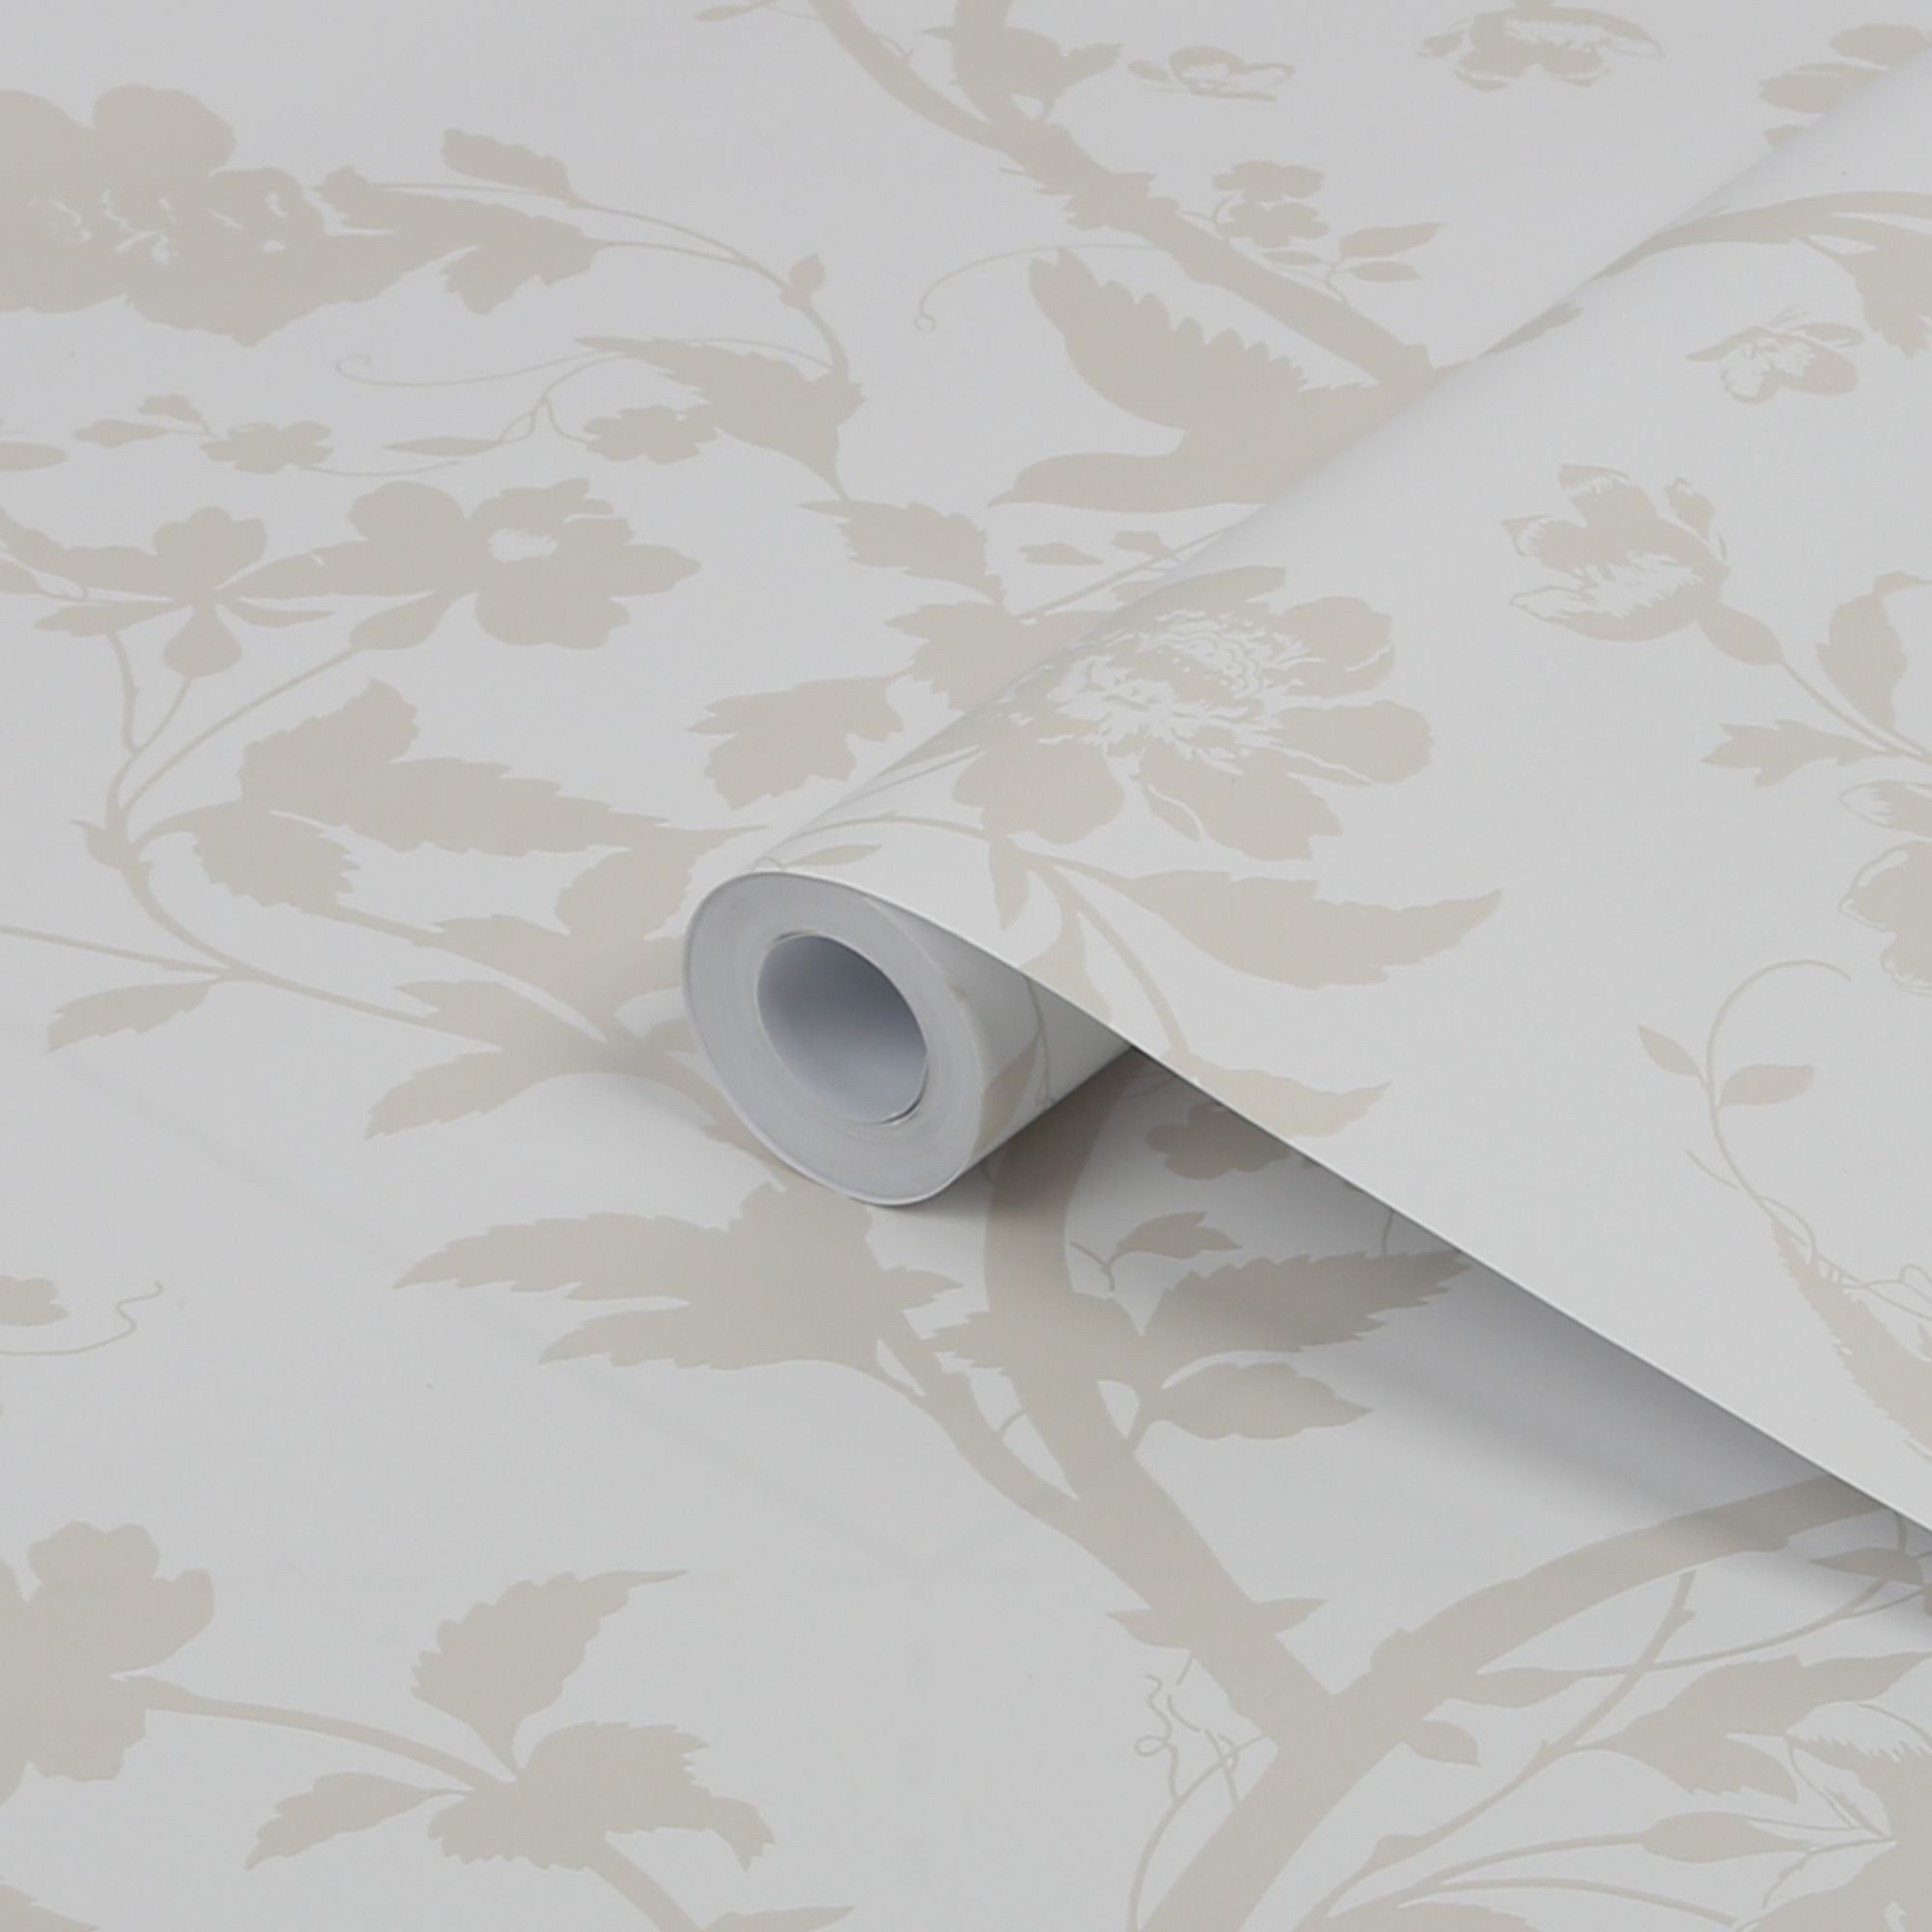 Laura Ashley Oriental Pearlescent white Garden Smooth Wallpaper Sample